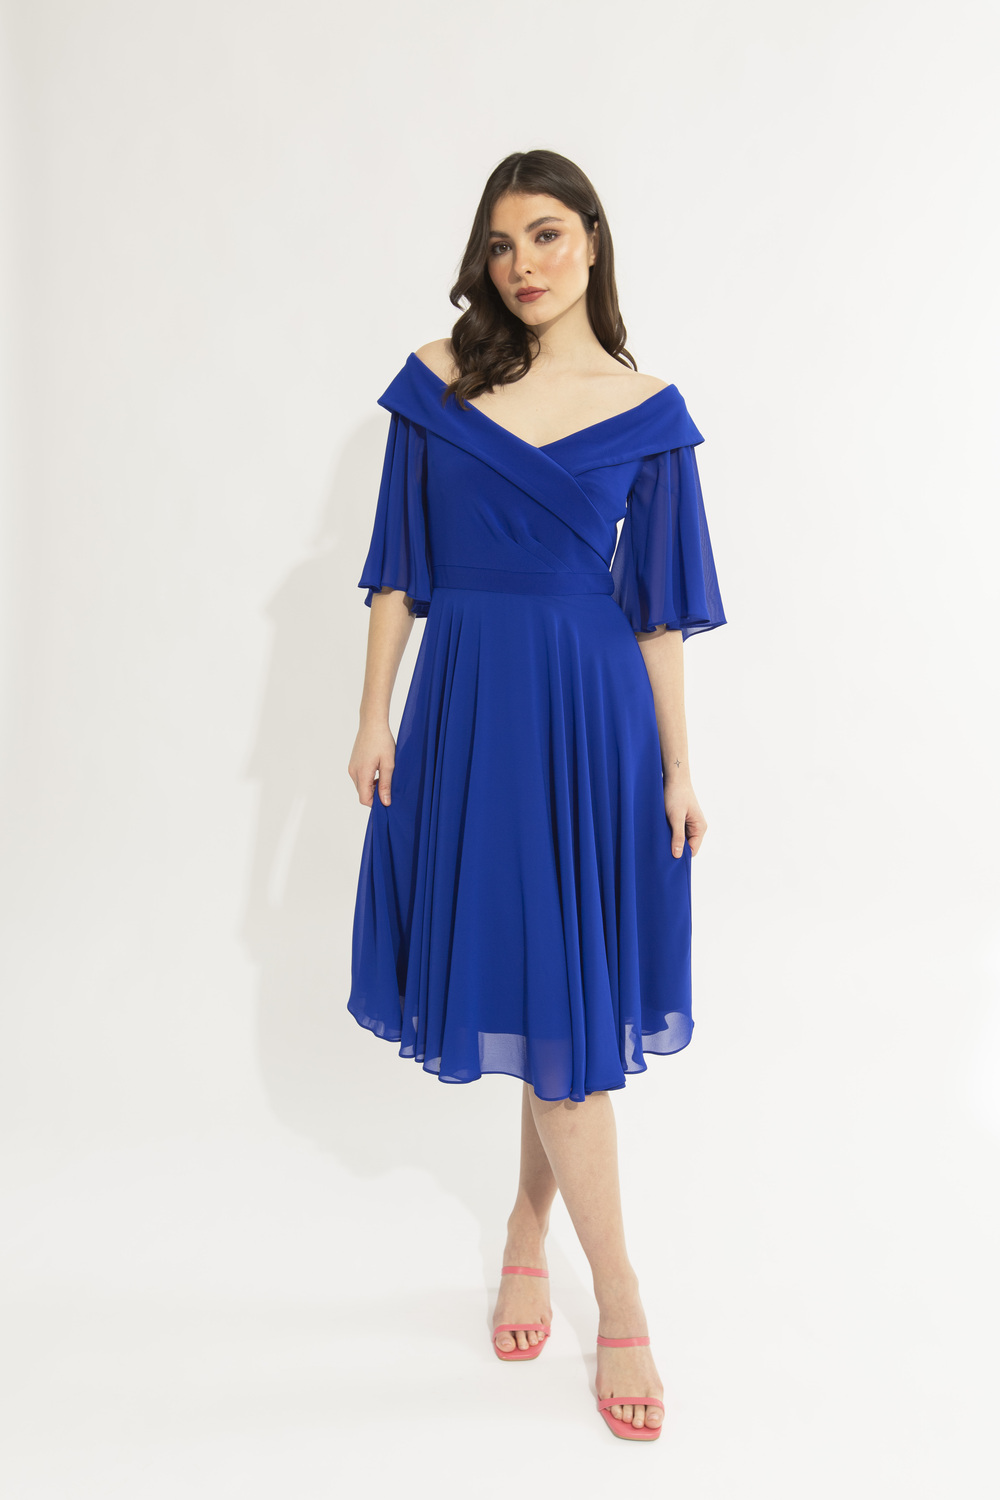 Off-Shoulder Evening Dress Style 231723. Royal Sapphire 163